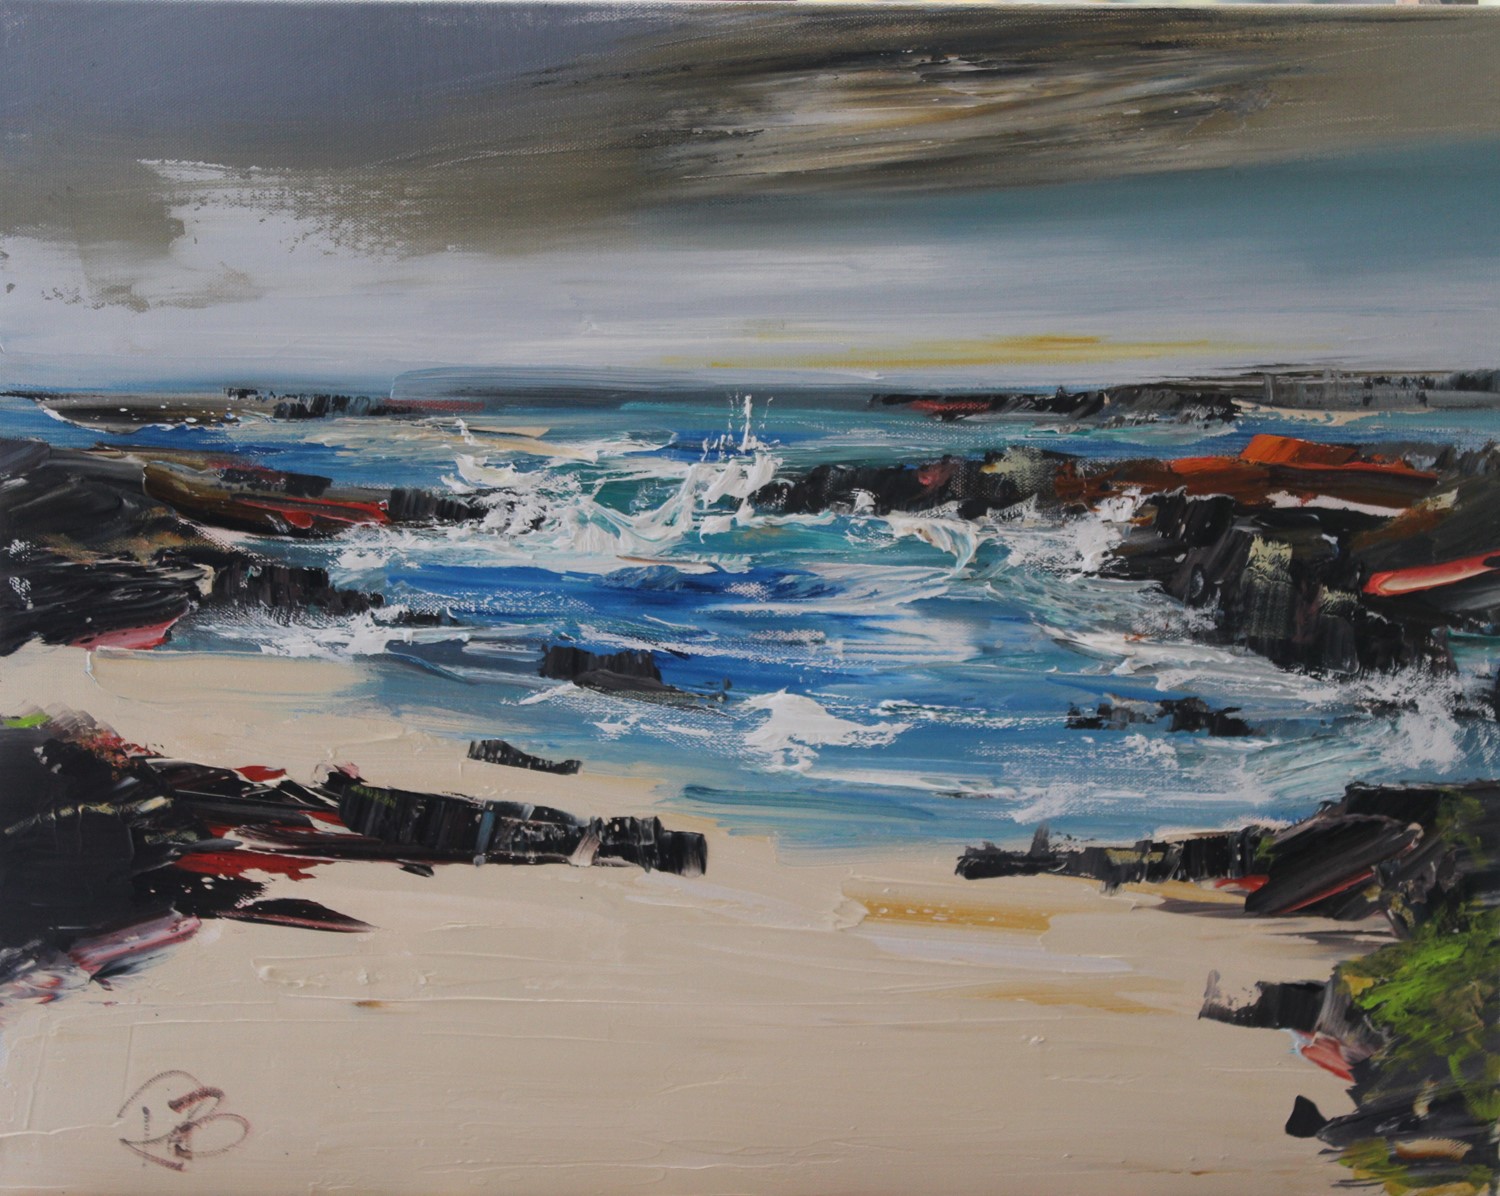 'Sea Spray over the Bay' by artist Rosanne Barr